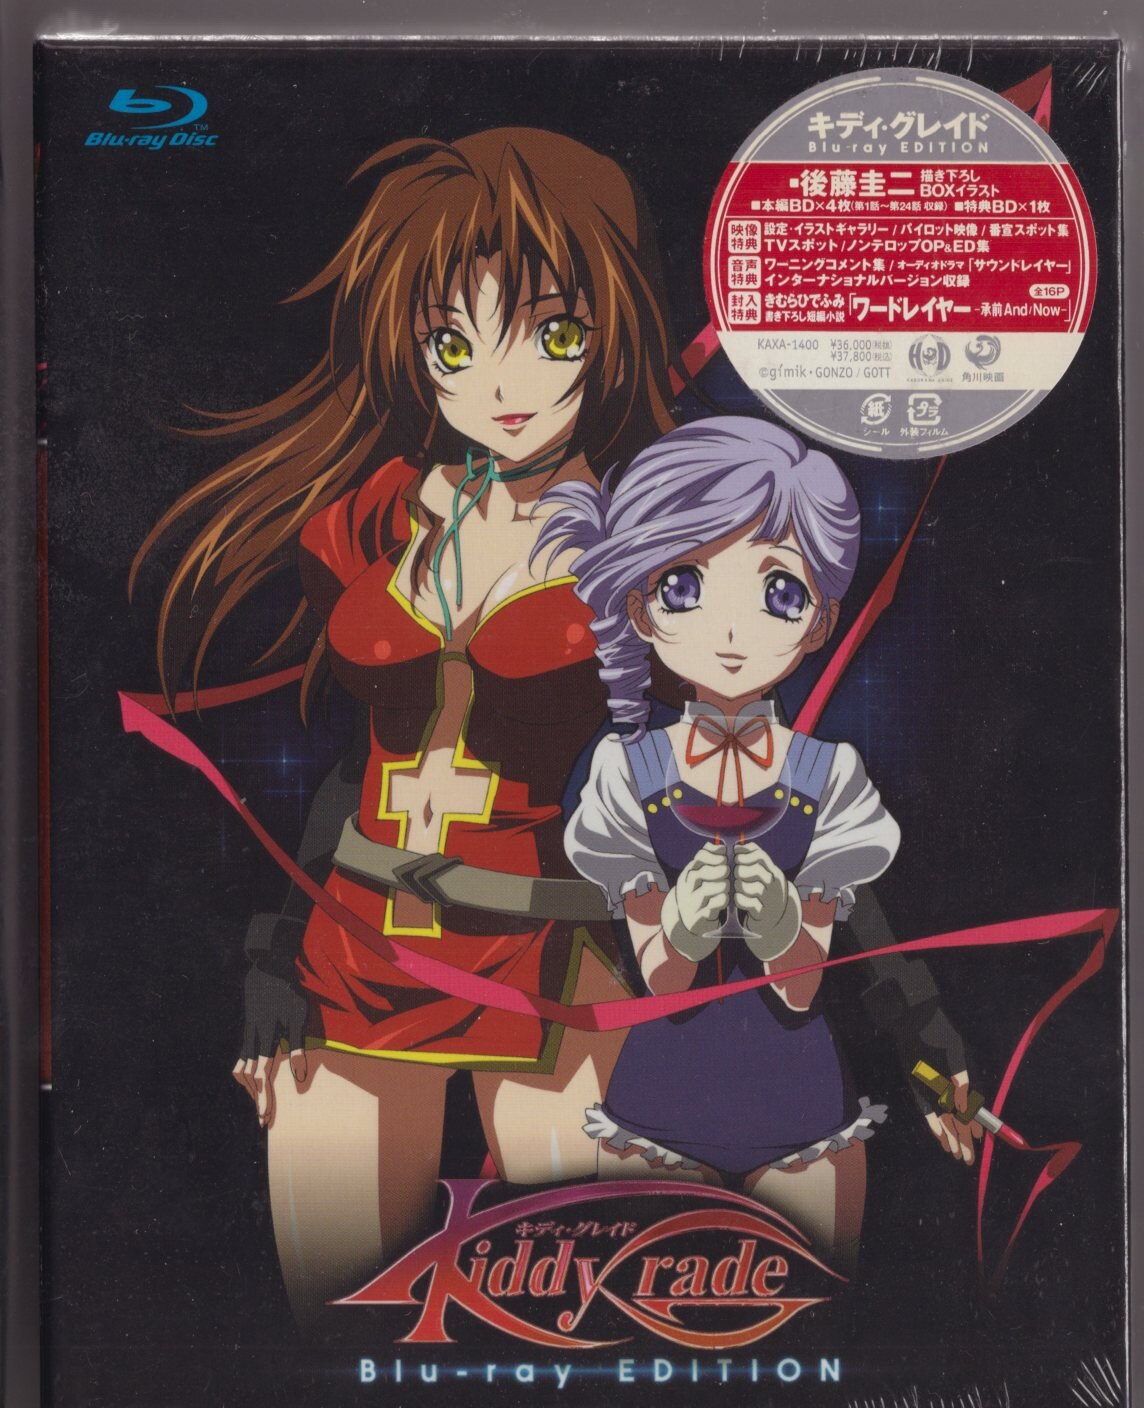 Anime Blu-ray Kiddy Grade Blu-ray EDITION ※Unopened | Mandarake Online Shop